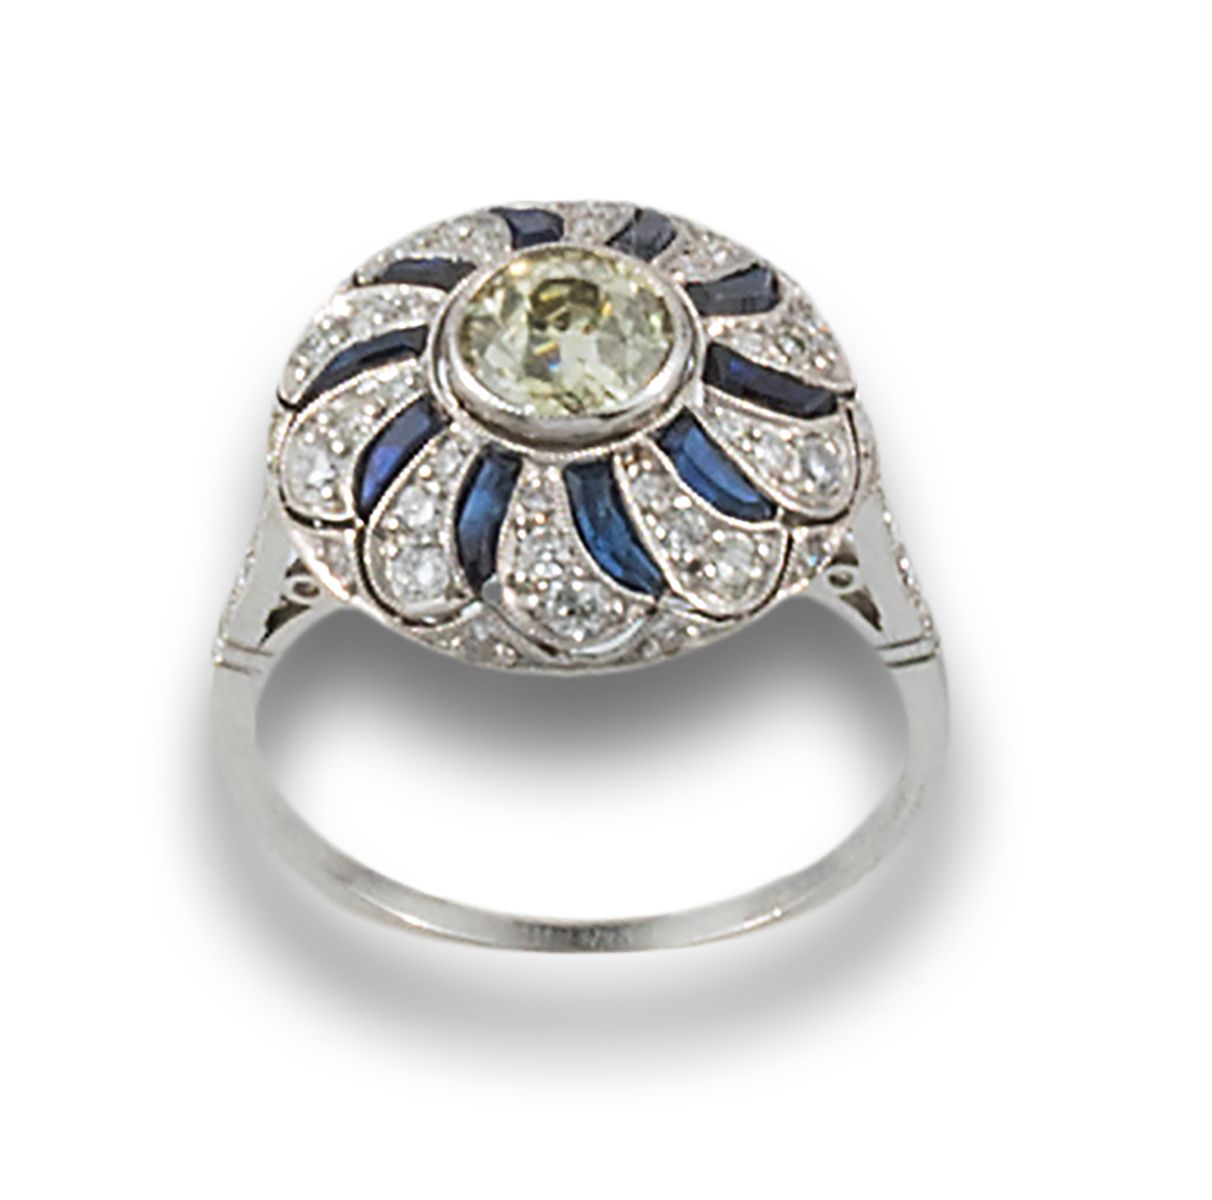 Ring, old style, platinum 由一颗中央的钻石形成，旧式切割，估计为0.70克拉，镶嵌在查顿中。钻石边框，明亮式切割和蓝宝石刀片。